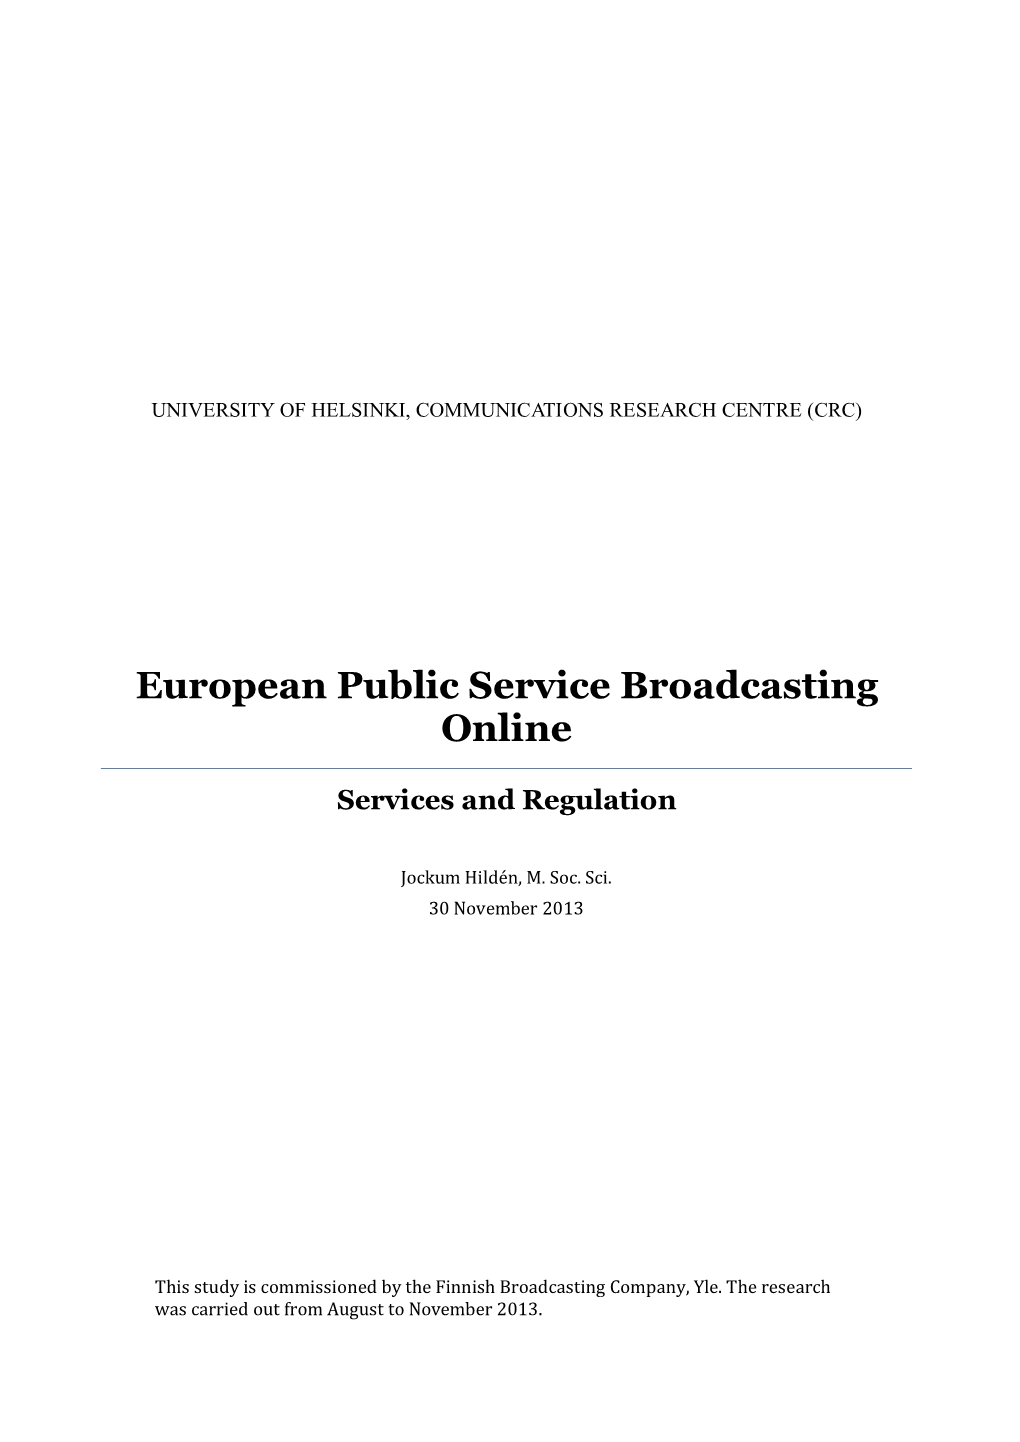 European Public Service Broadcasting Online